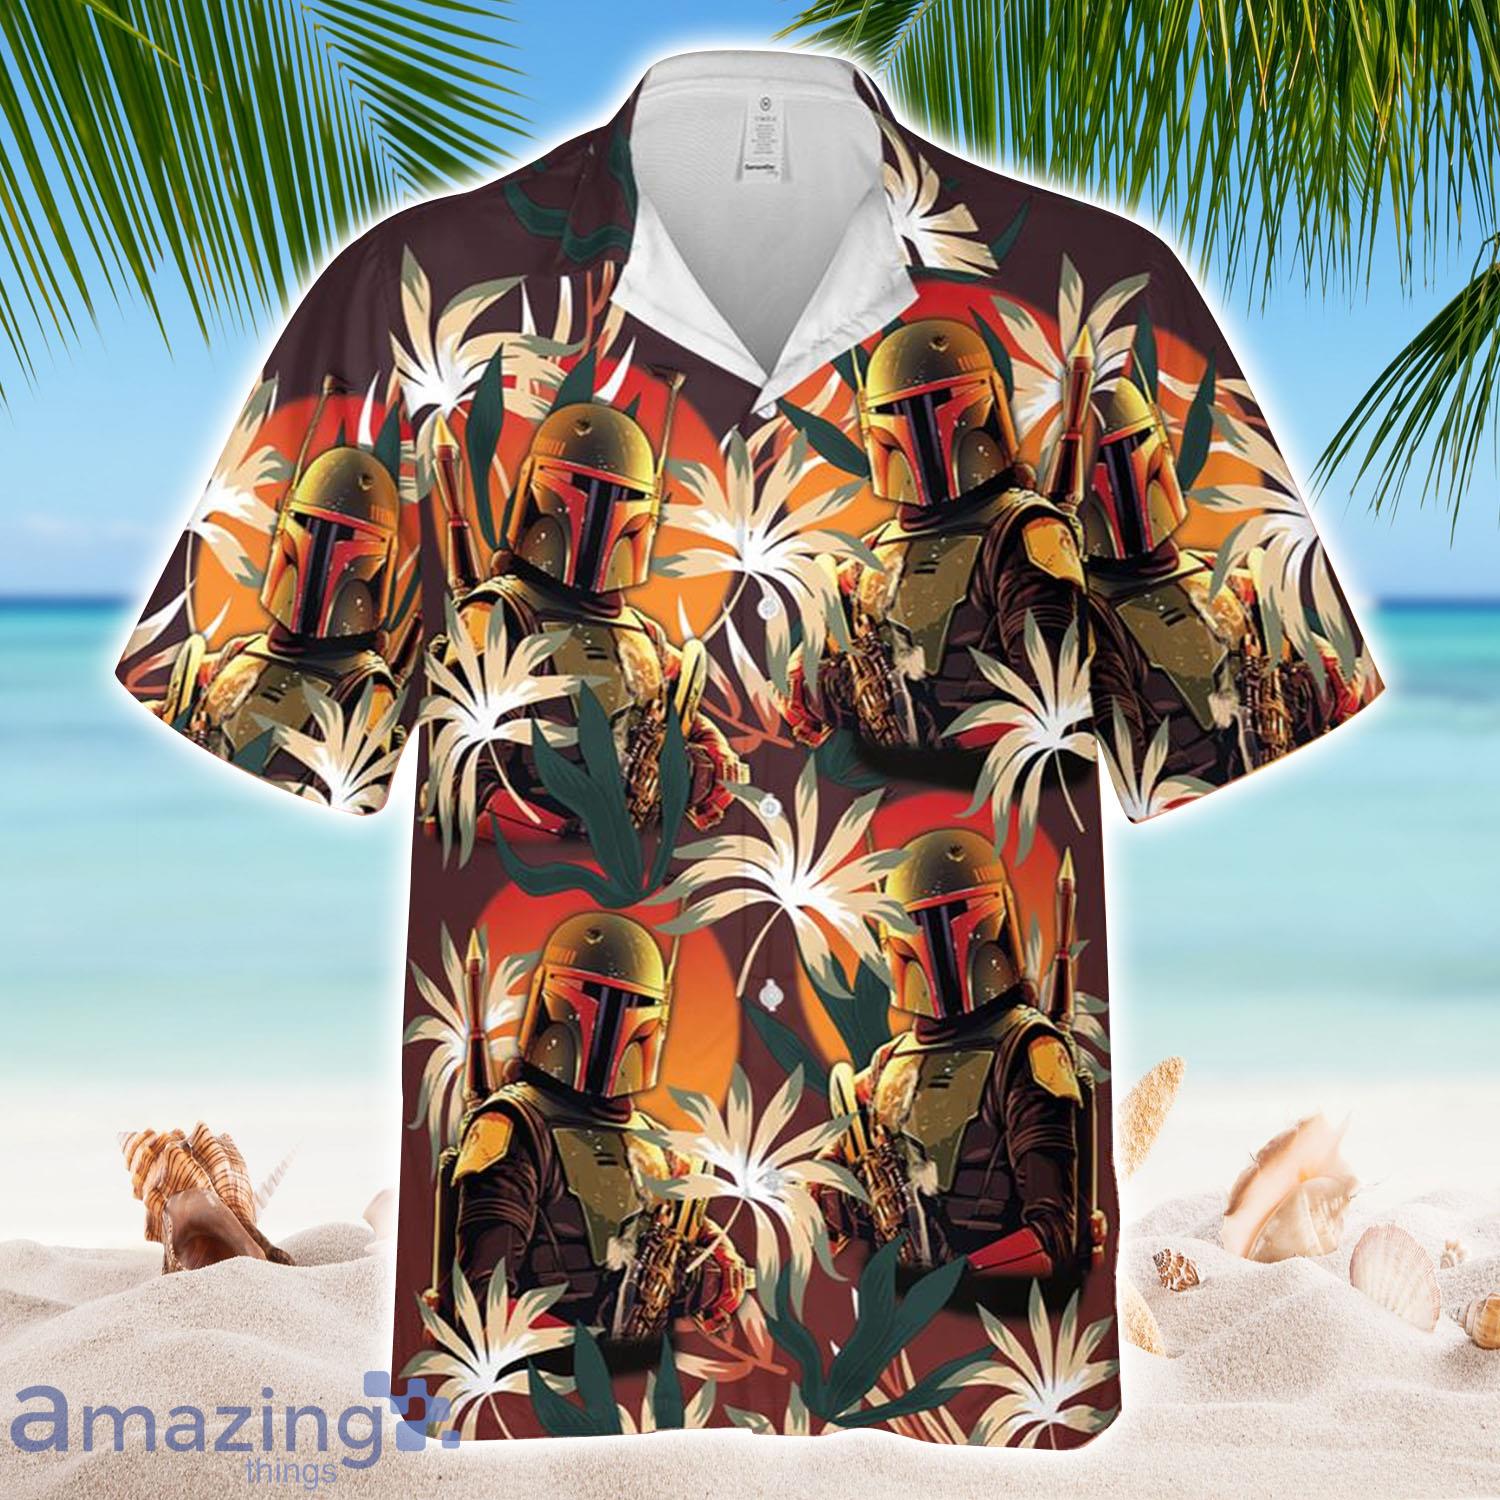 Star Wars Hawaiian Shirt The Mandalorian - Star Wars Hawaiian Shirt The Mandalorian